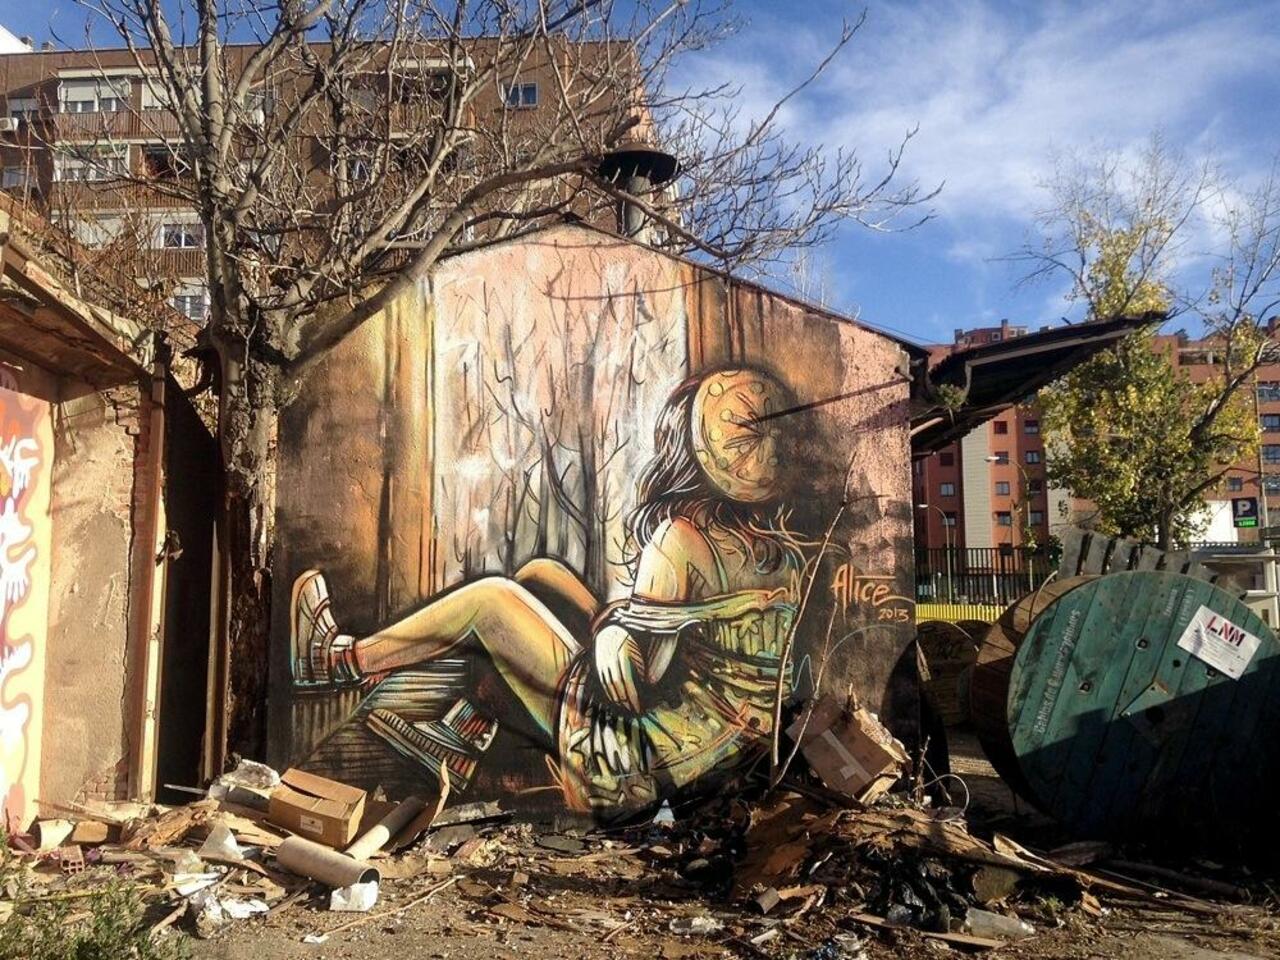 "@Pitchuskita: Street Art by Alice in Madrid

#streetart #art #urbanart #graffiti http://t.co/6zbSRNQm6d"